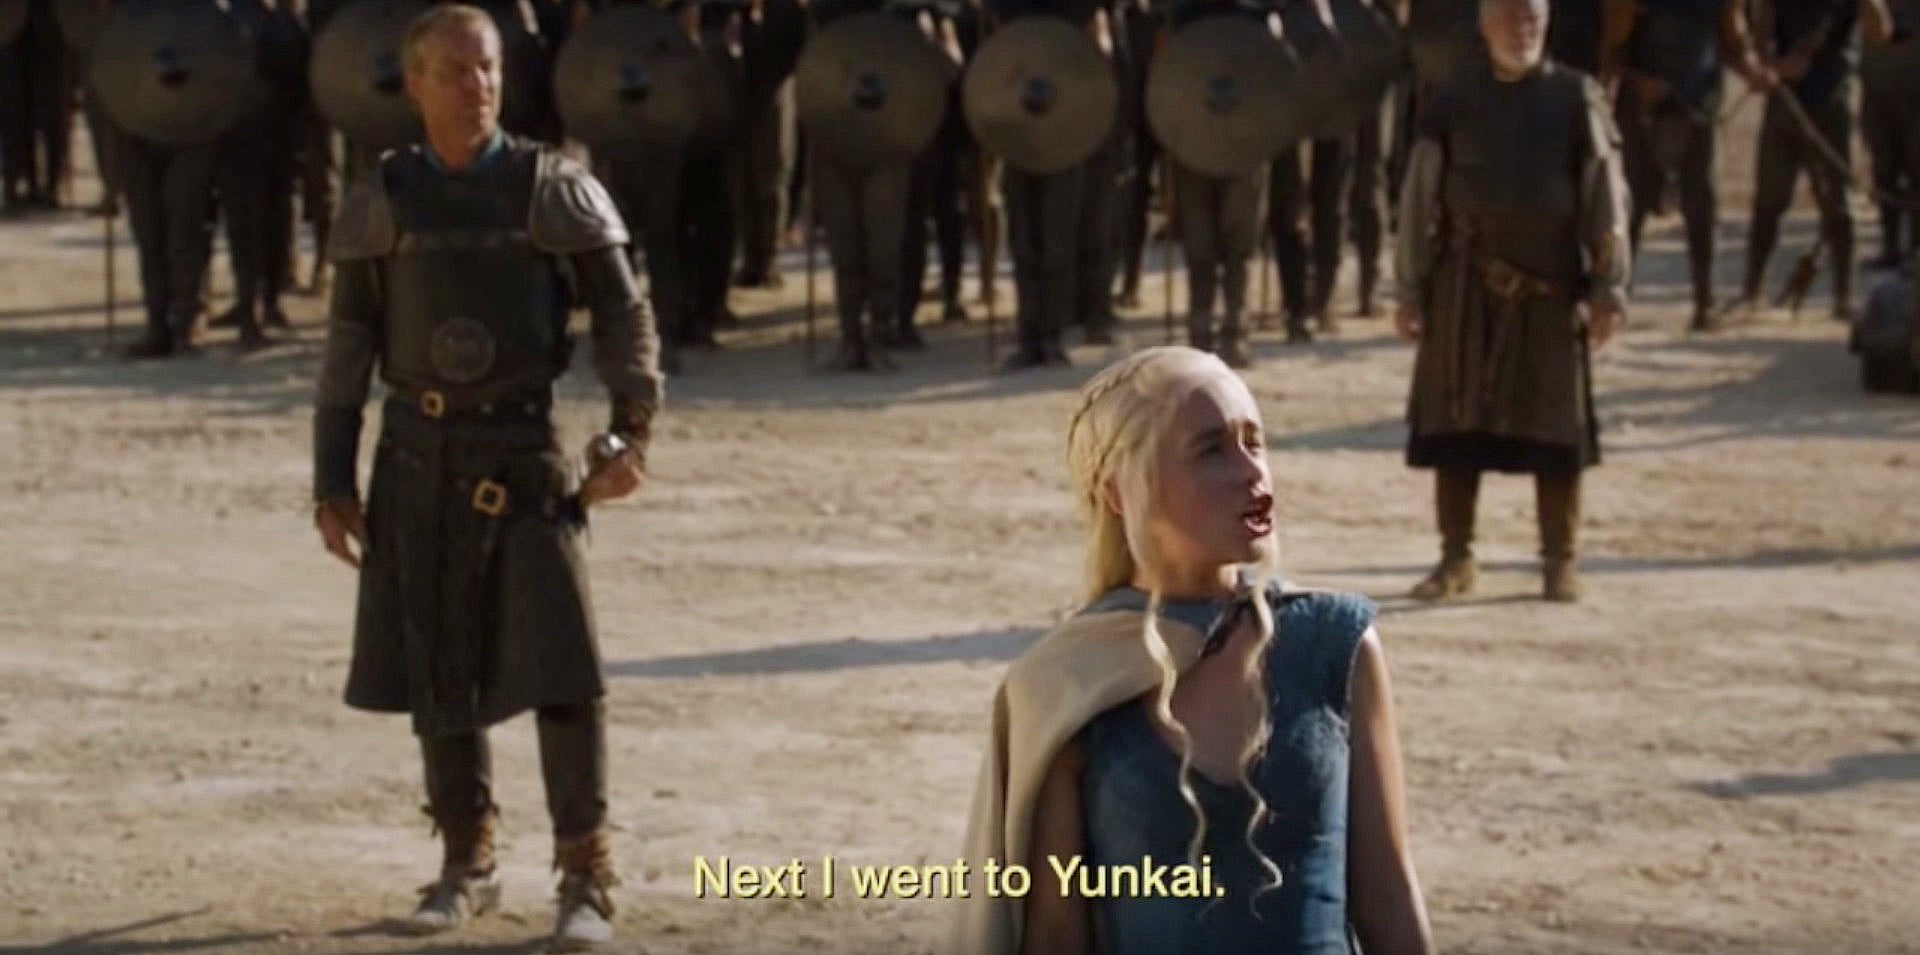 Daenerys speaking Valyrian